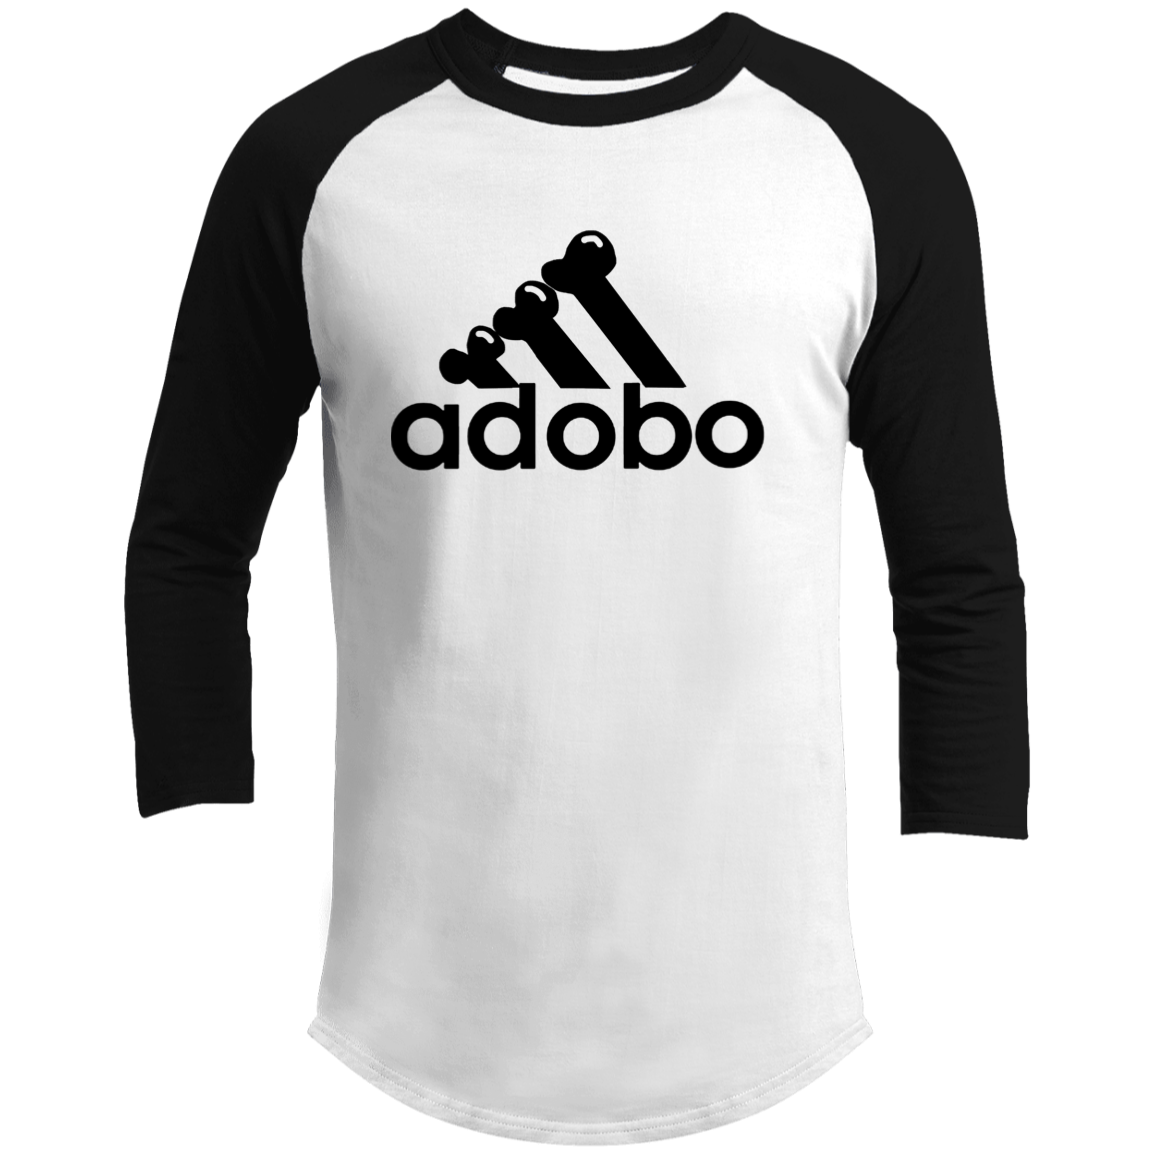 ArtichokeUSA Custom Design. Adobo. Adidas Parody. 3/4 Raglan Sleeve Shirt